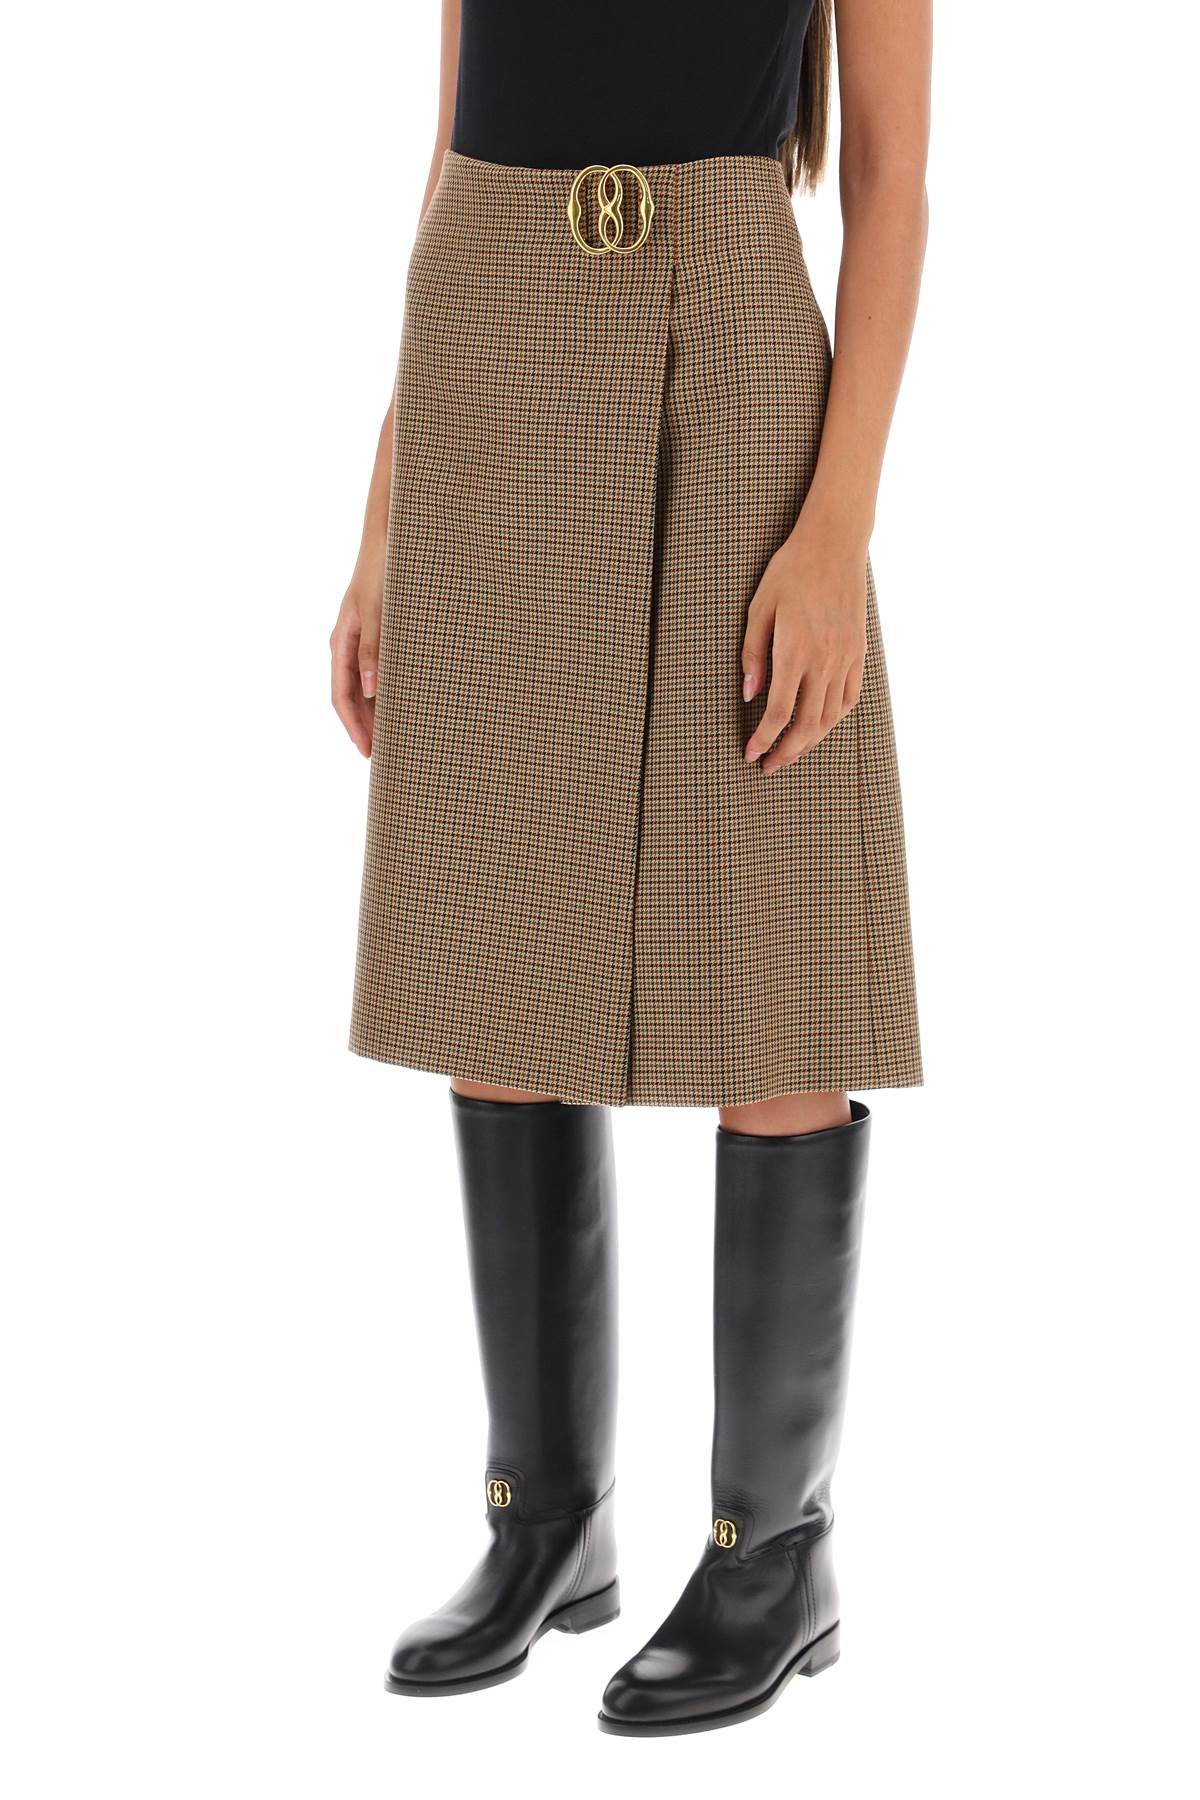 Bally Houndstooth A-Line Skirt With Emblem Buckle-Bally-Urbanheer